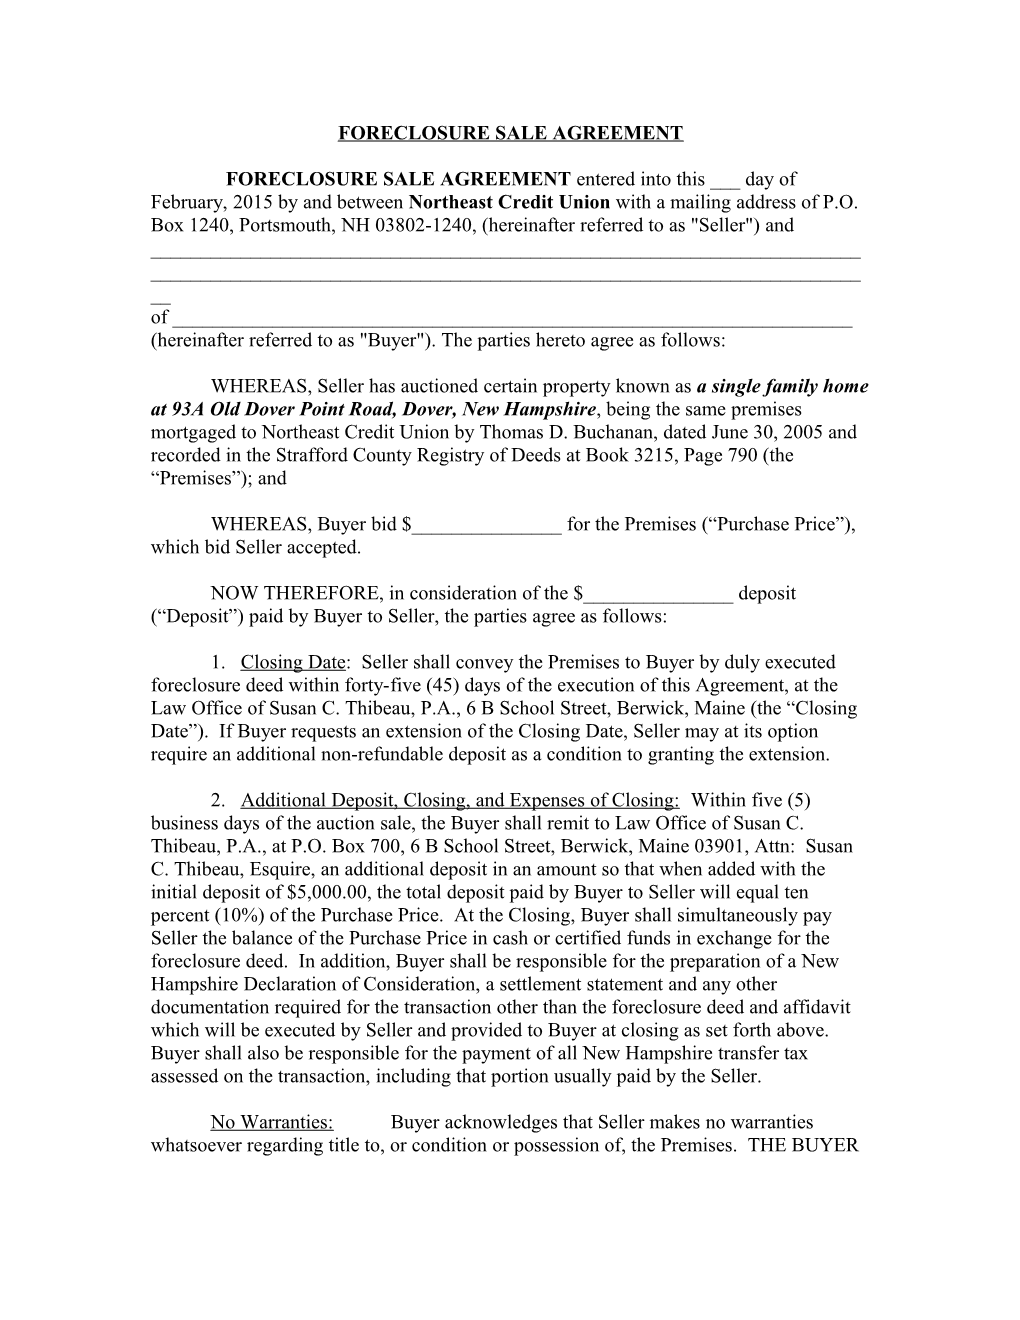 Memorandum of Agreement Regarding Foreclosure Sale